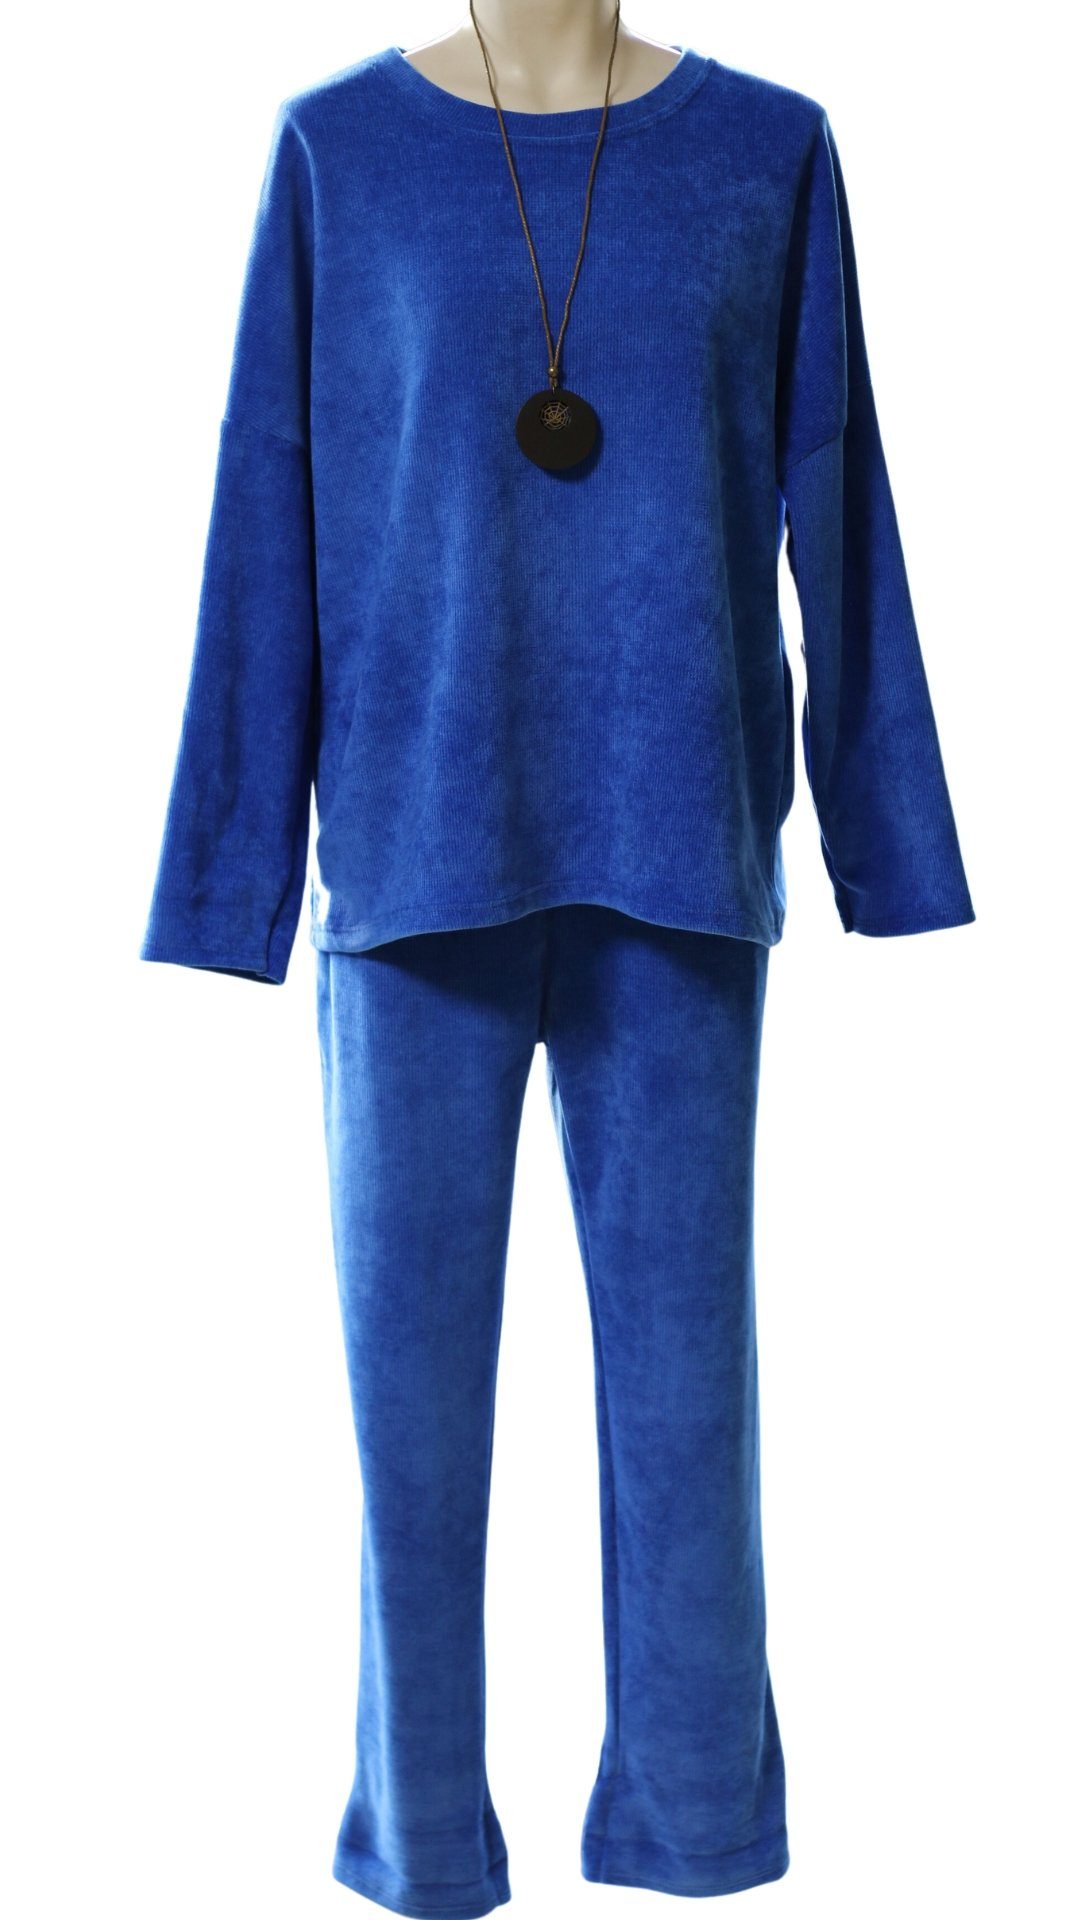 Charis Moda Hausanzug Loungewear Set Chilltime Outfit zweiteiliger Hausanzug Royalblau